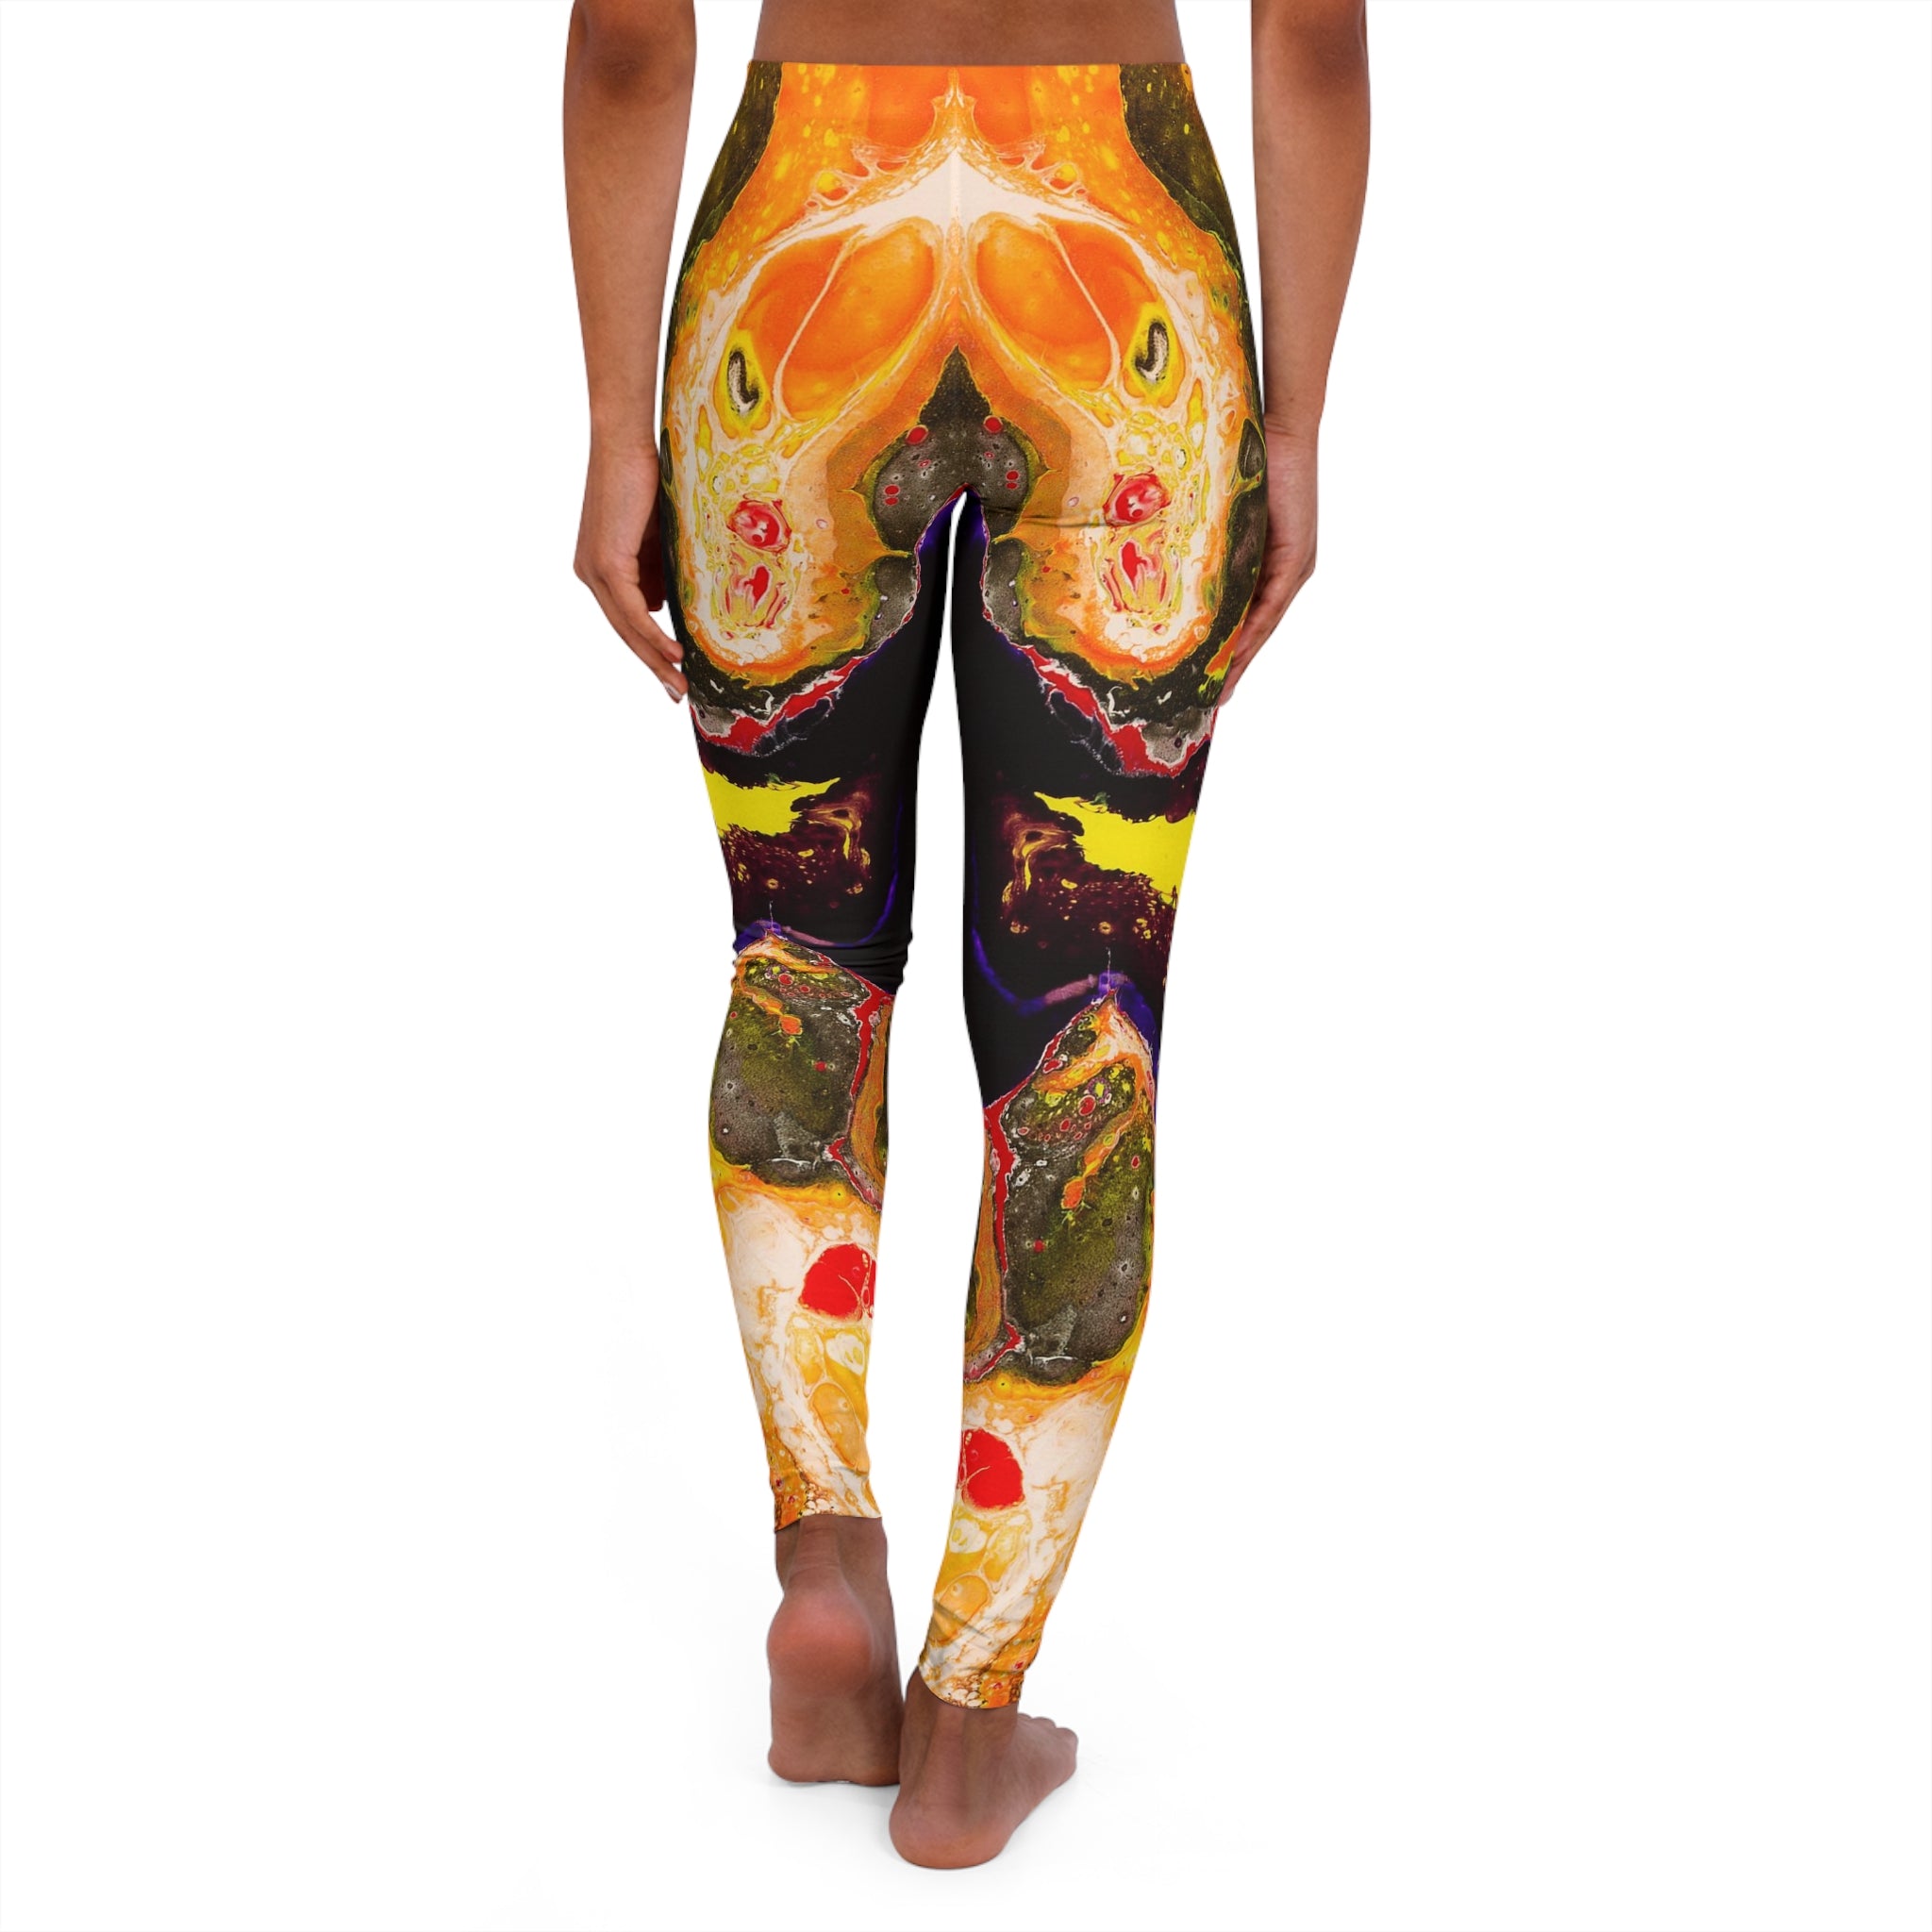 Women's Spandex Leggings - Organic Orange - Back